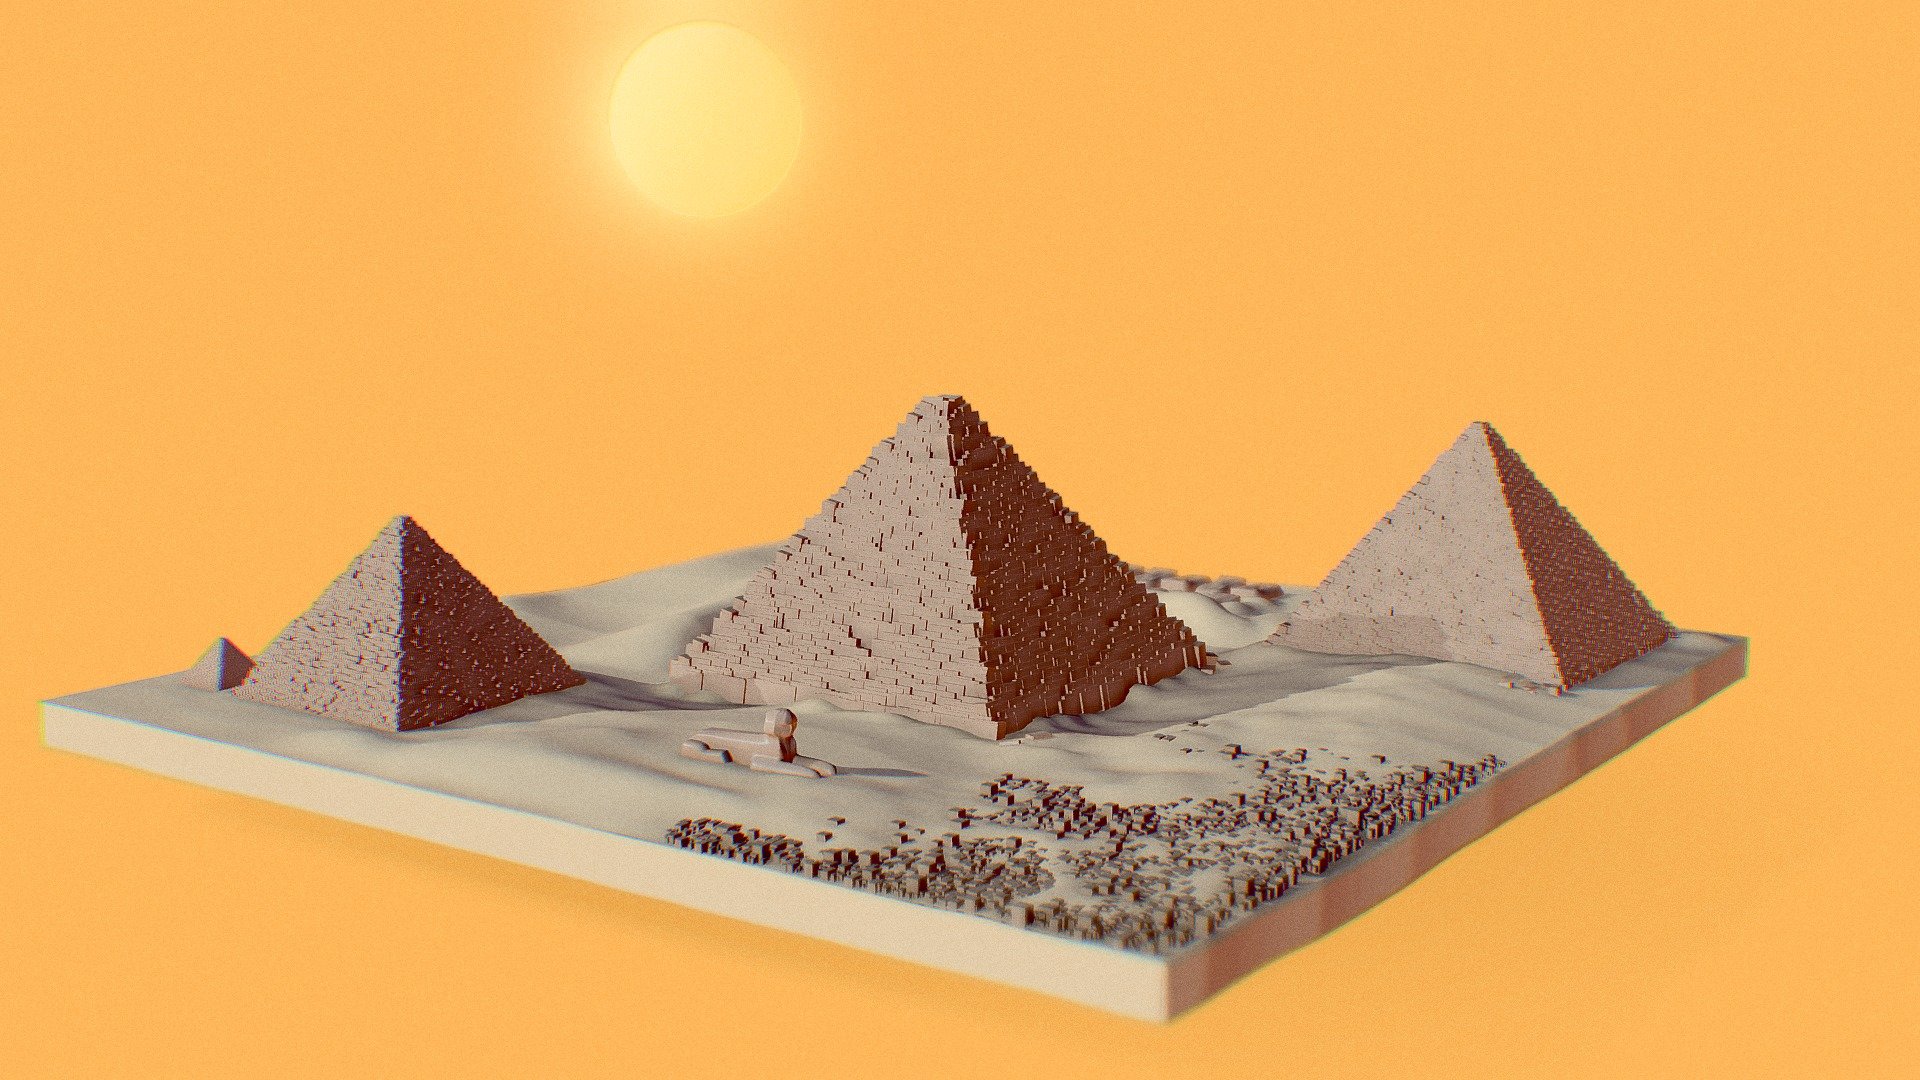 Pyramids of Egypts diorama, made in Blender 2.93 - GIZA - Pyramids diorama - 3D model by Mario Falasca (@marfal) 3d model